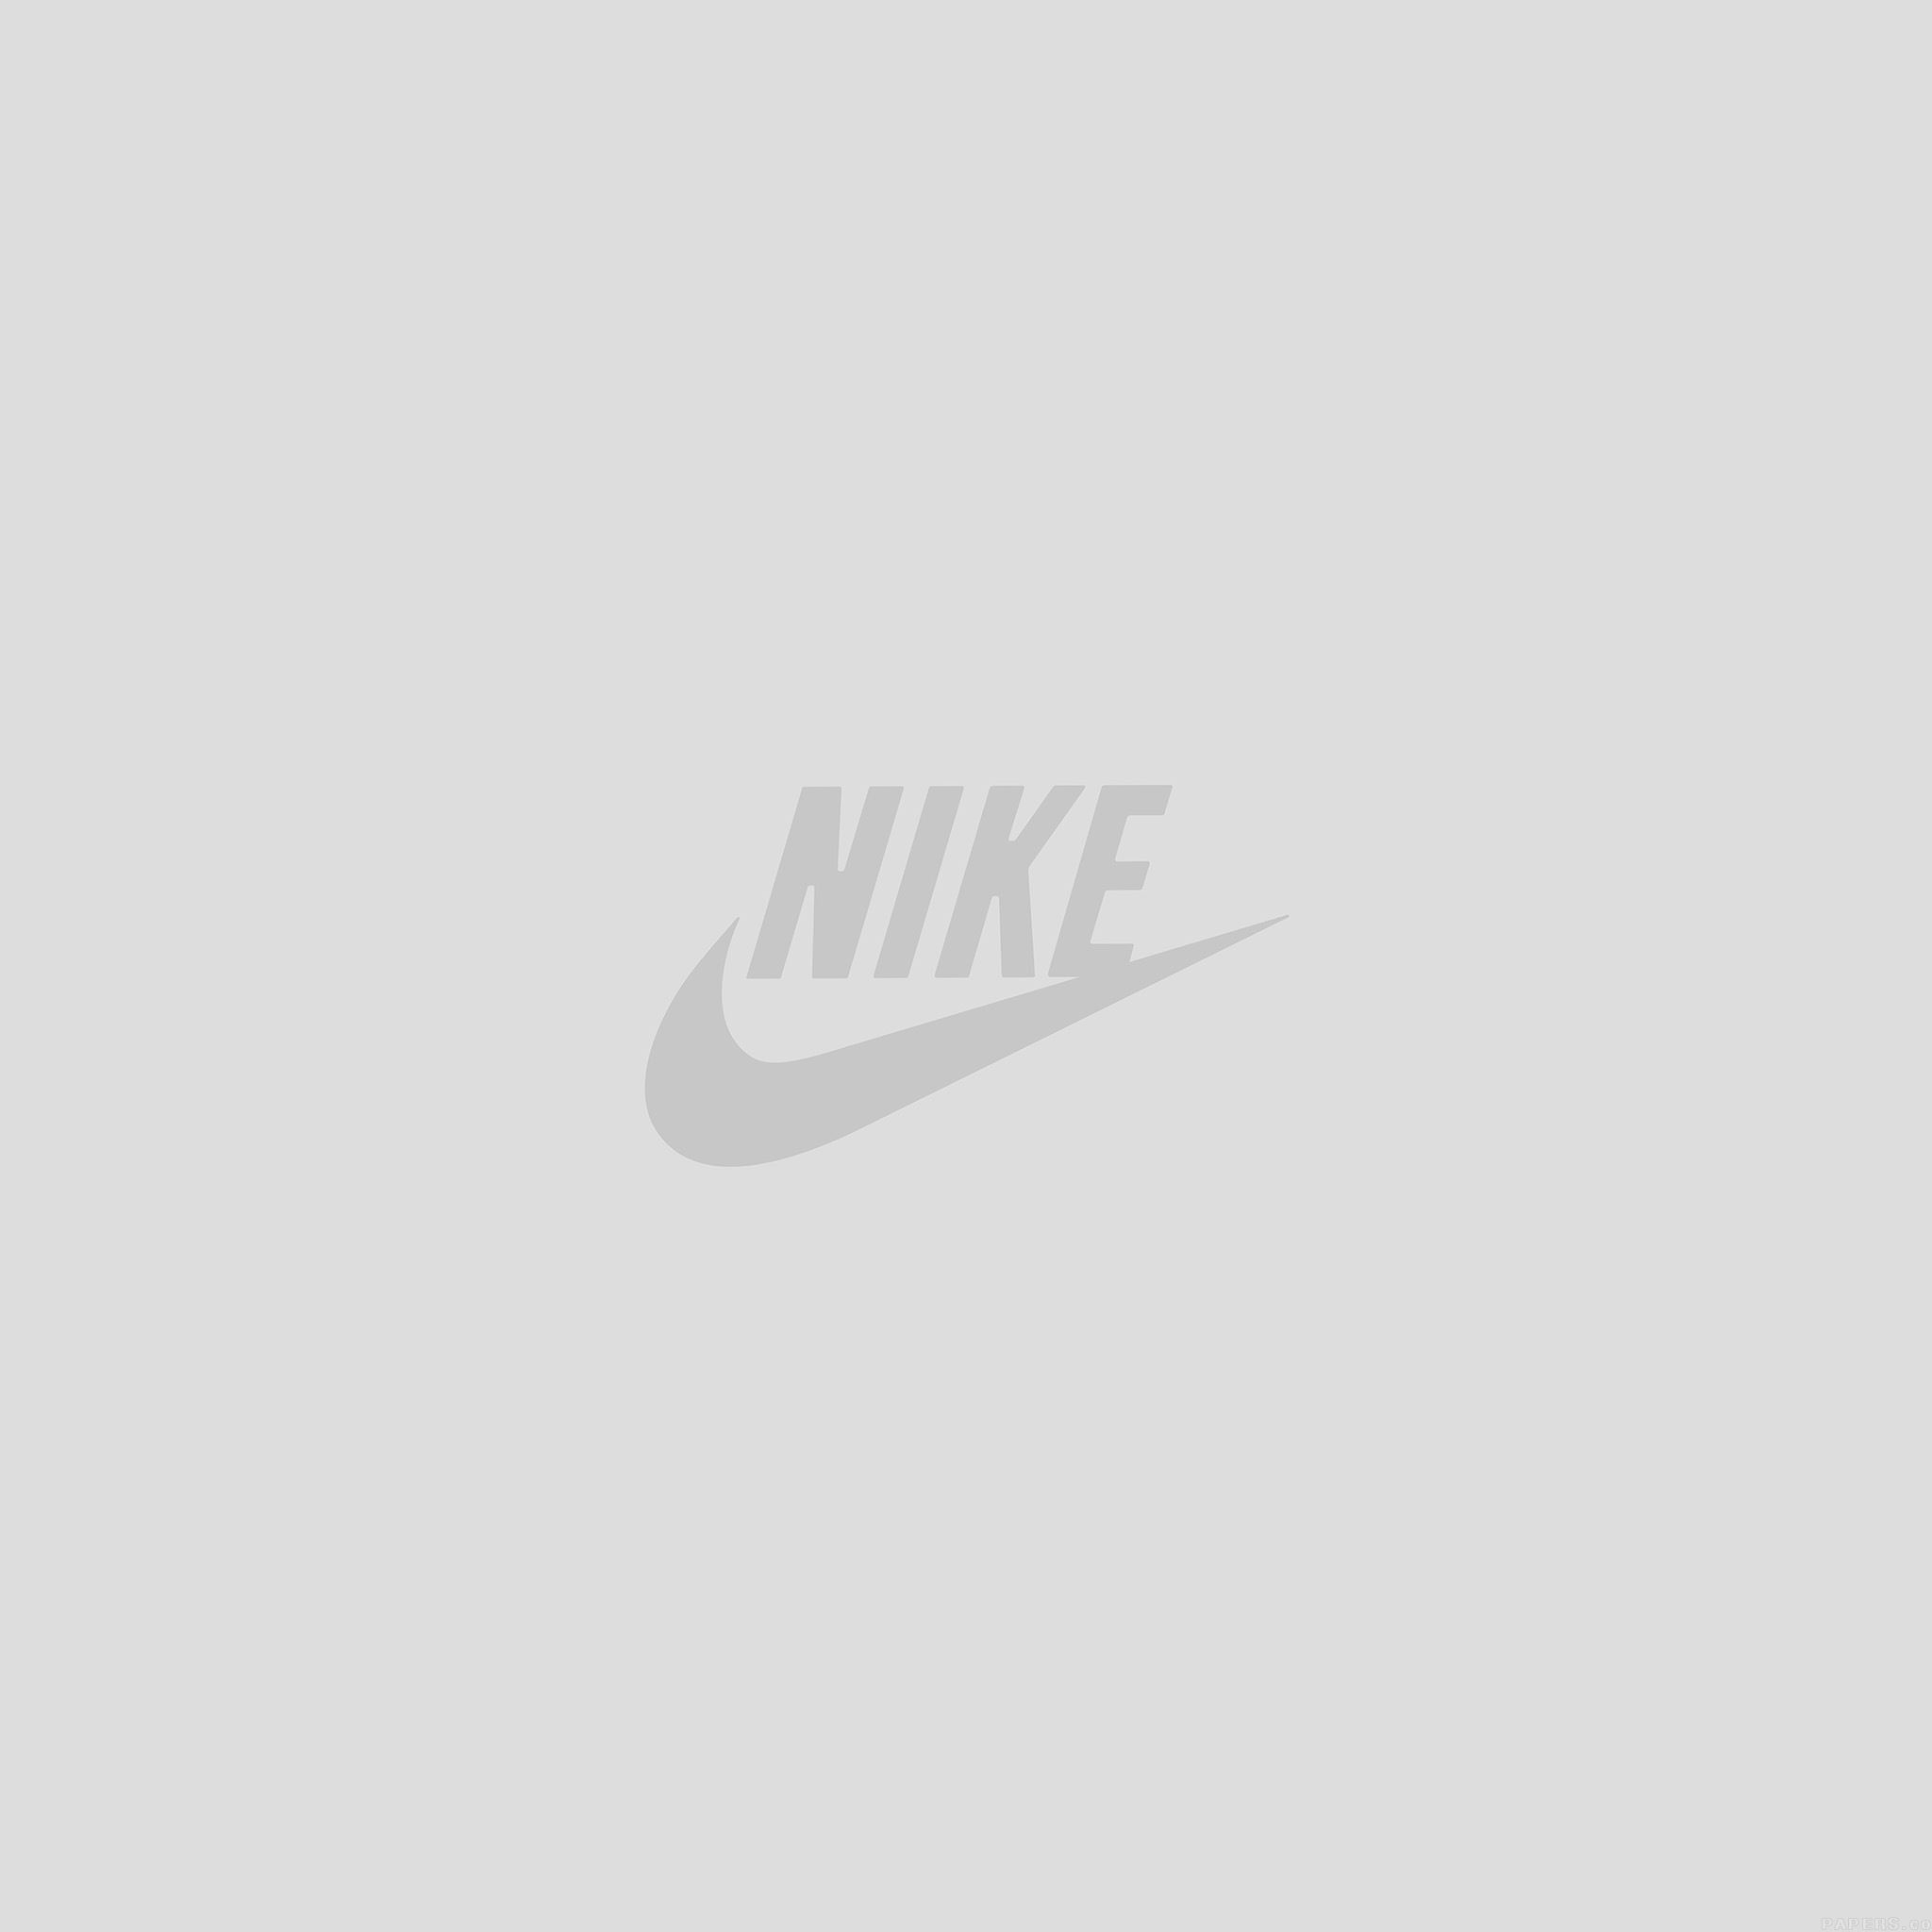 Nike Logo Sports Art Minimal Simple White Ipad Air Wallpapers Free Download